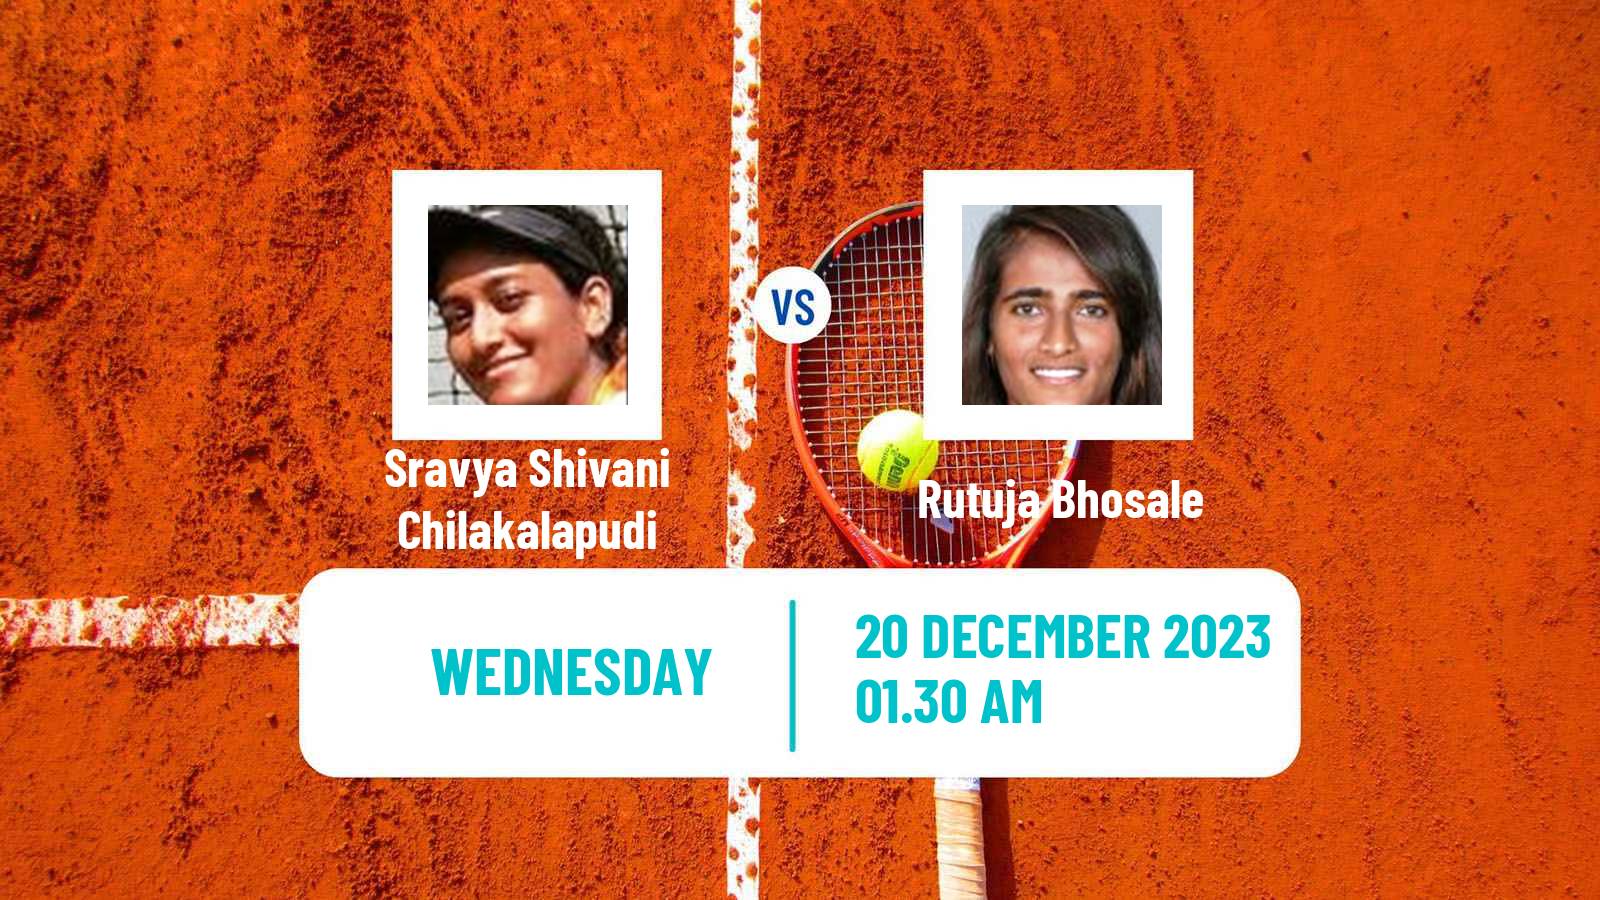 Tennis ITF W25 Solapur Women Sravya Shivani Chilakalapudi - Rutuja Bhosale